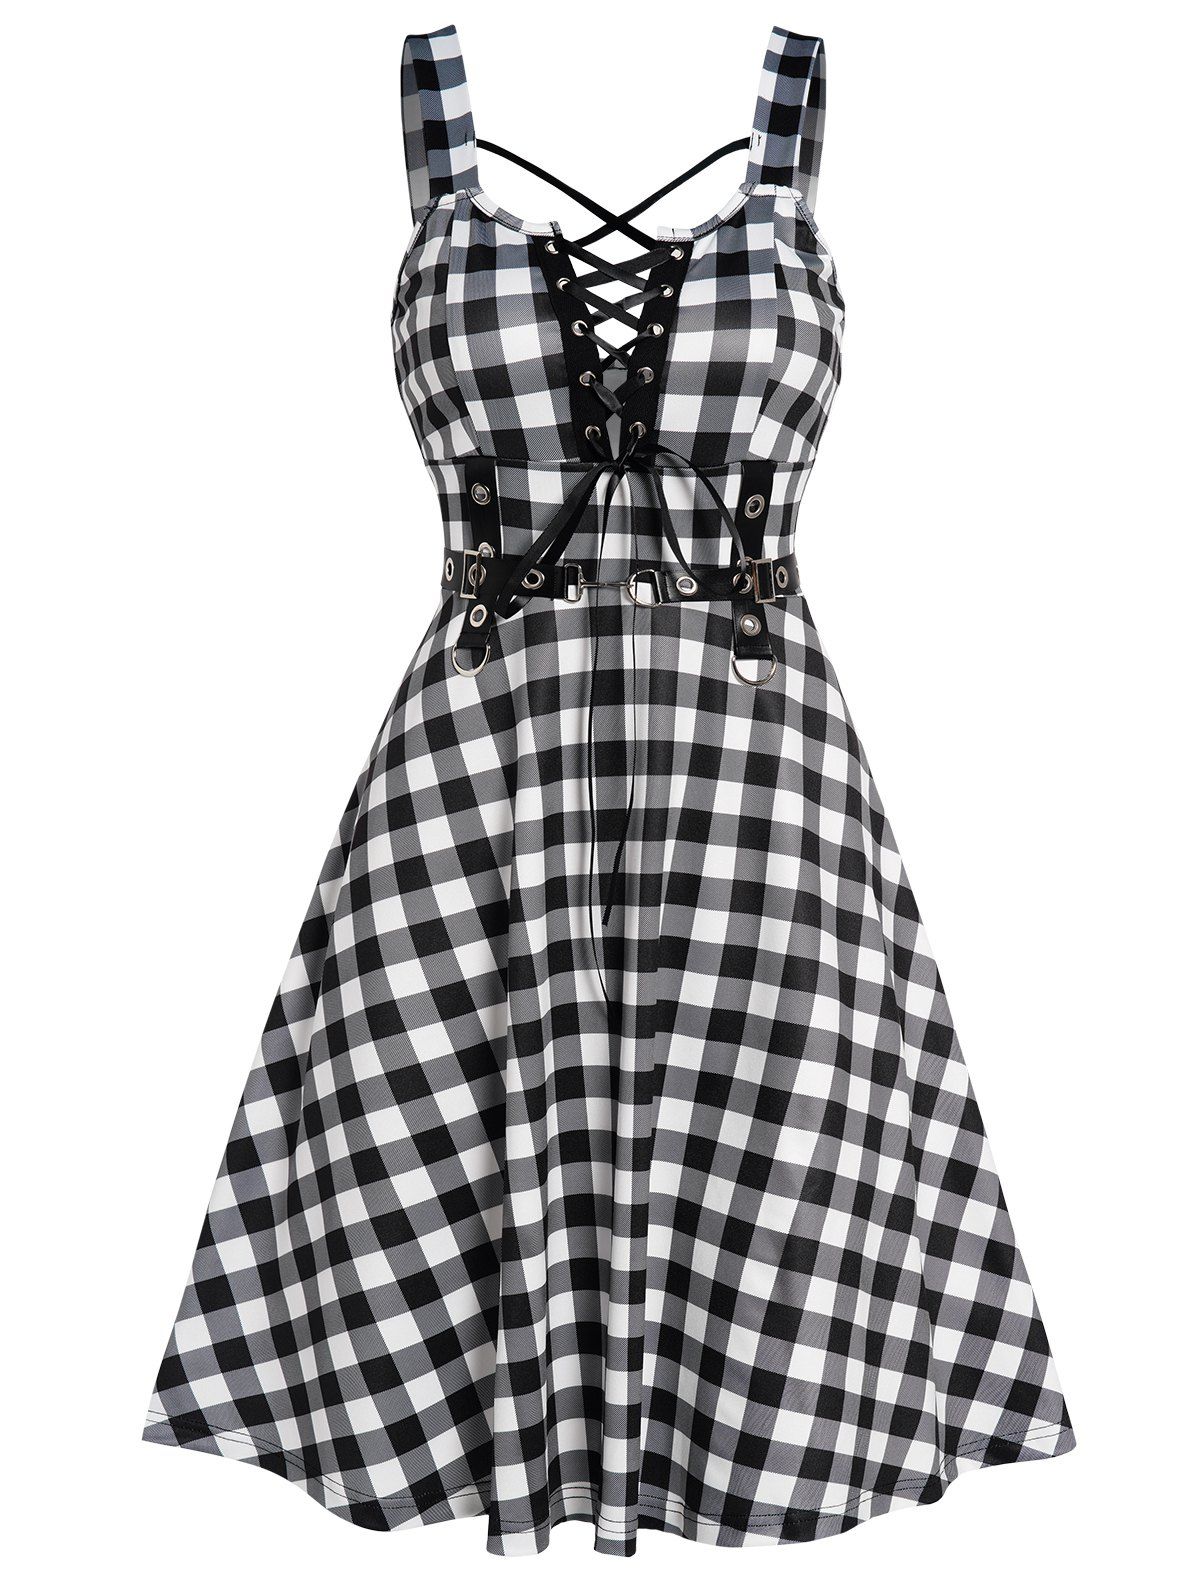 Plaid Print Dress Crisscross Lace Up Grommet High Waisted Sleeveless A Line Mini Dress - BLACK XL